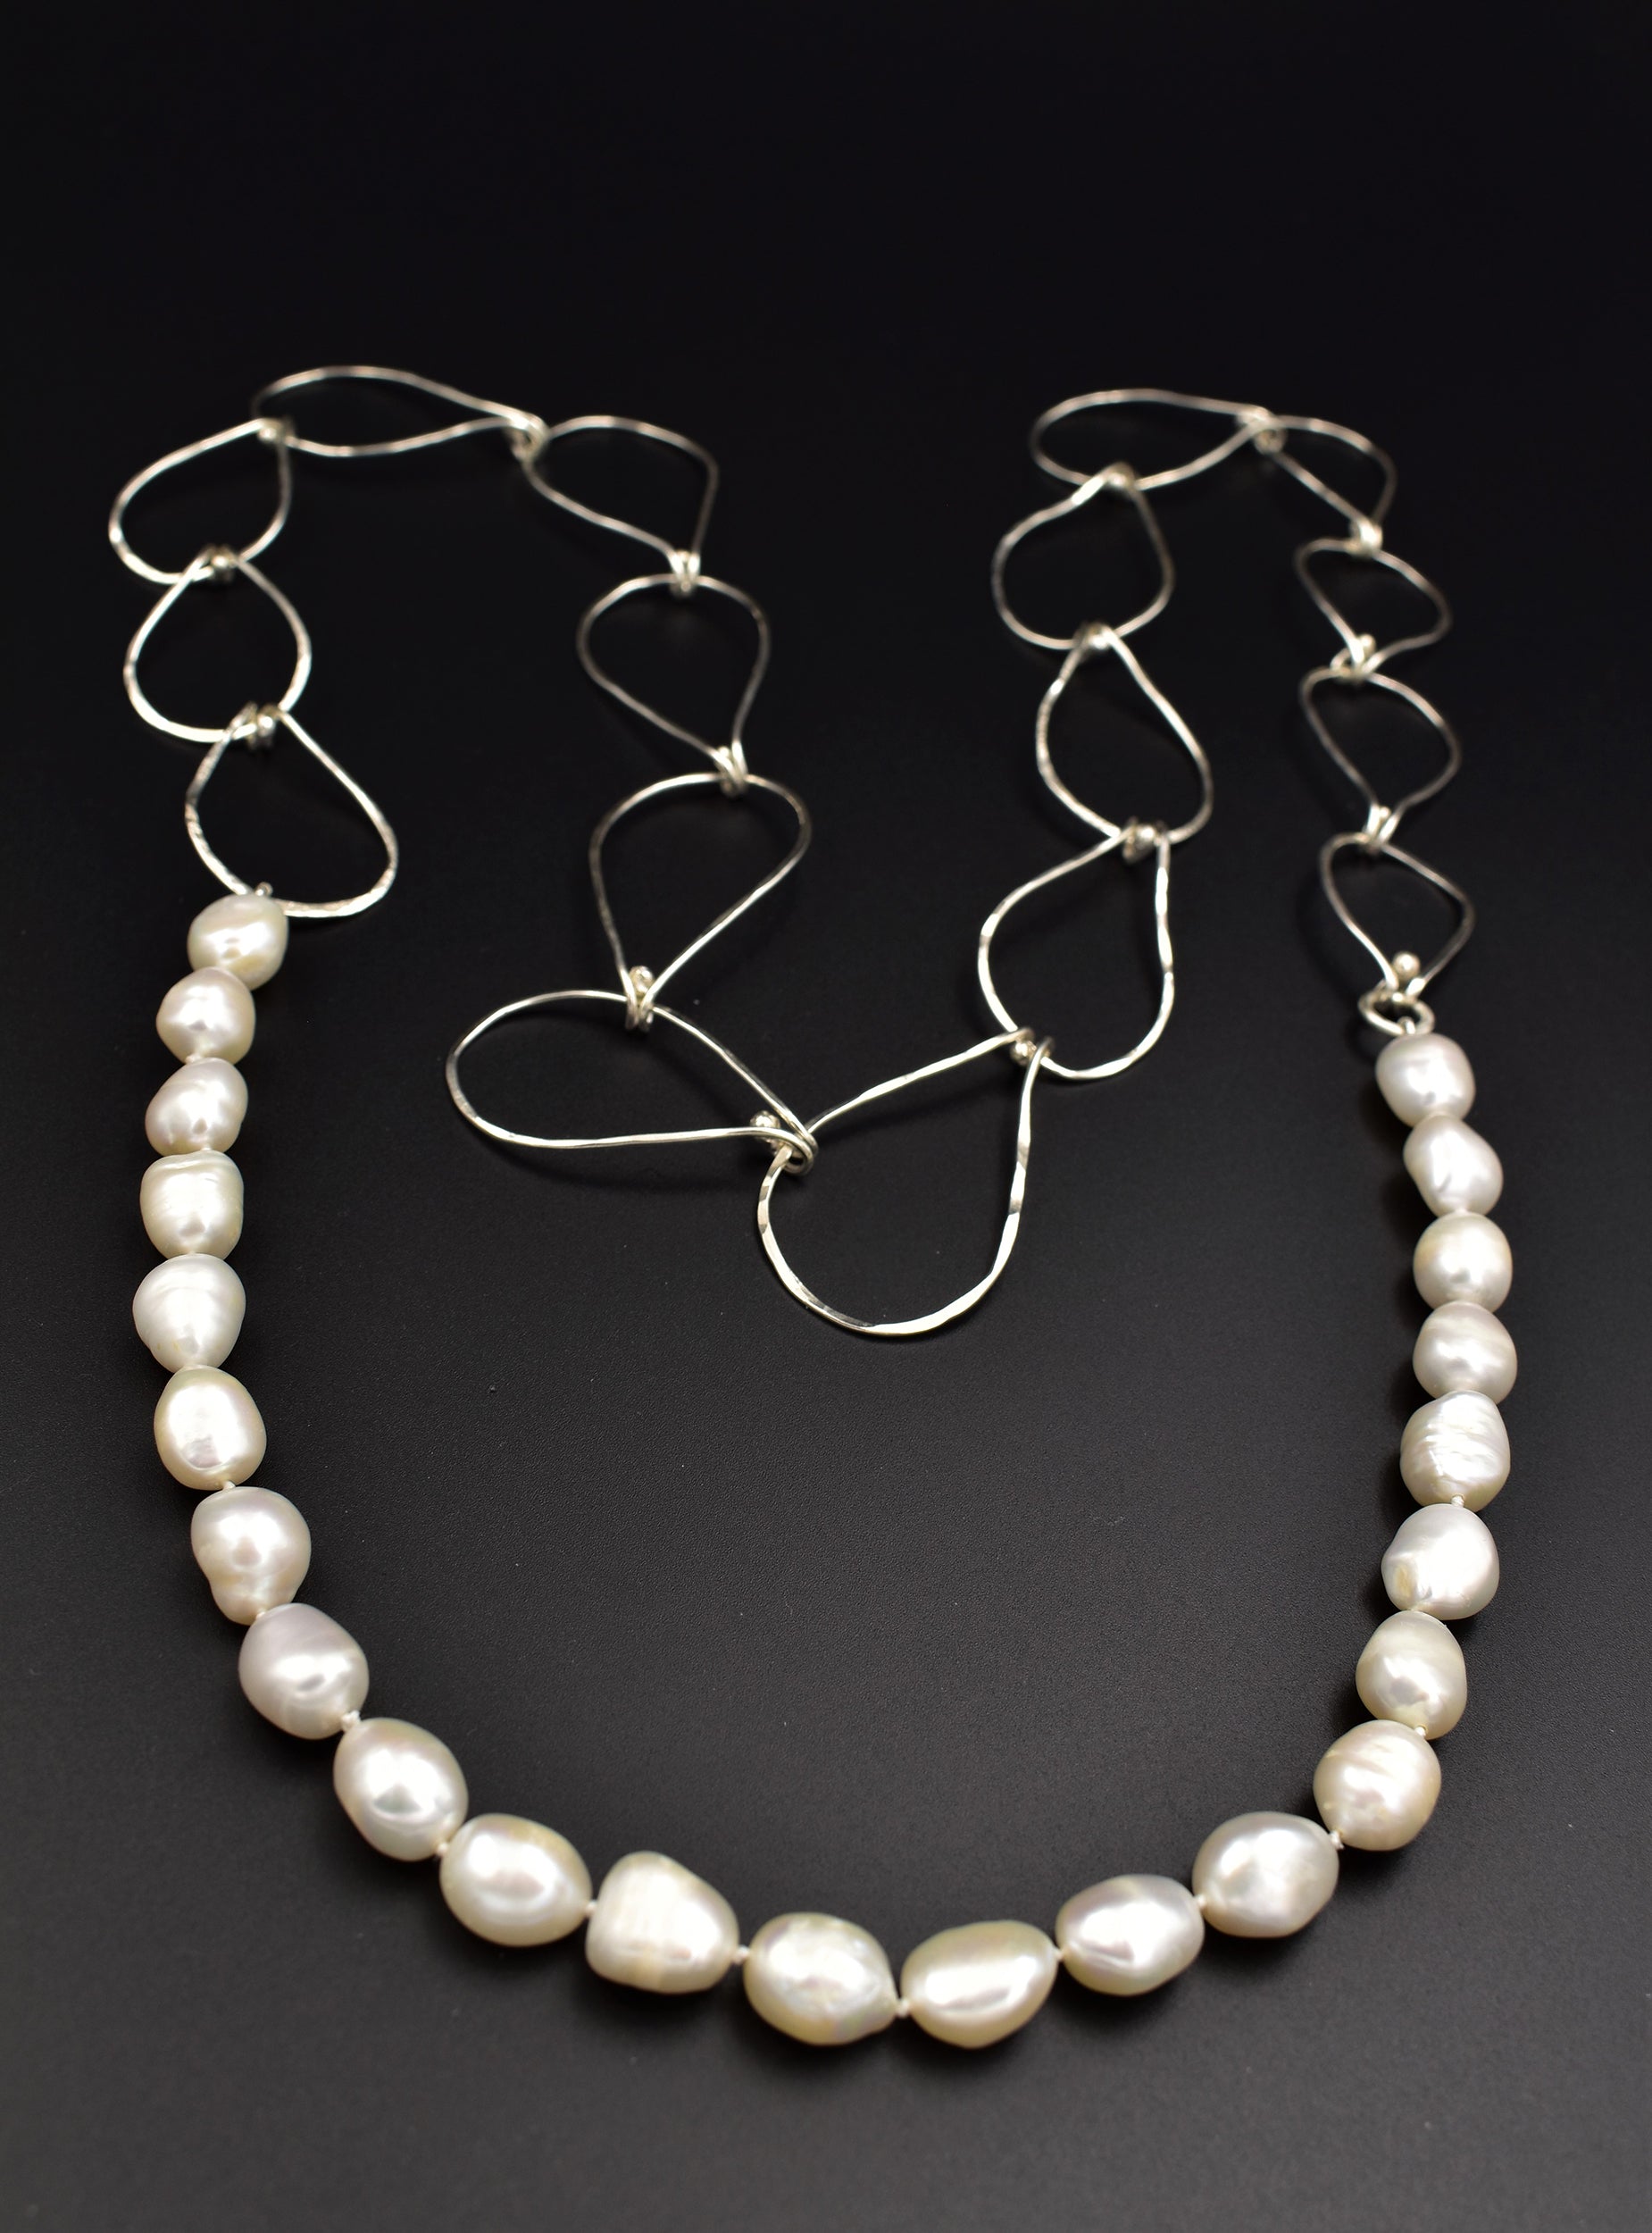 Moonlight Cascade - White Pearls